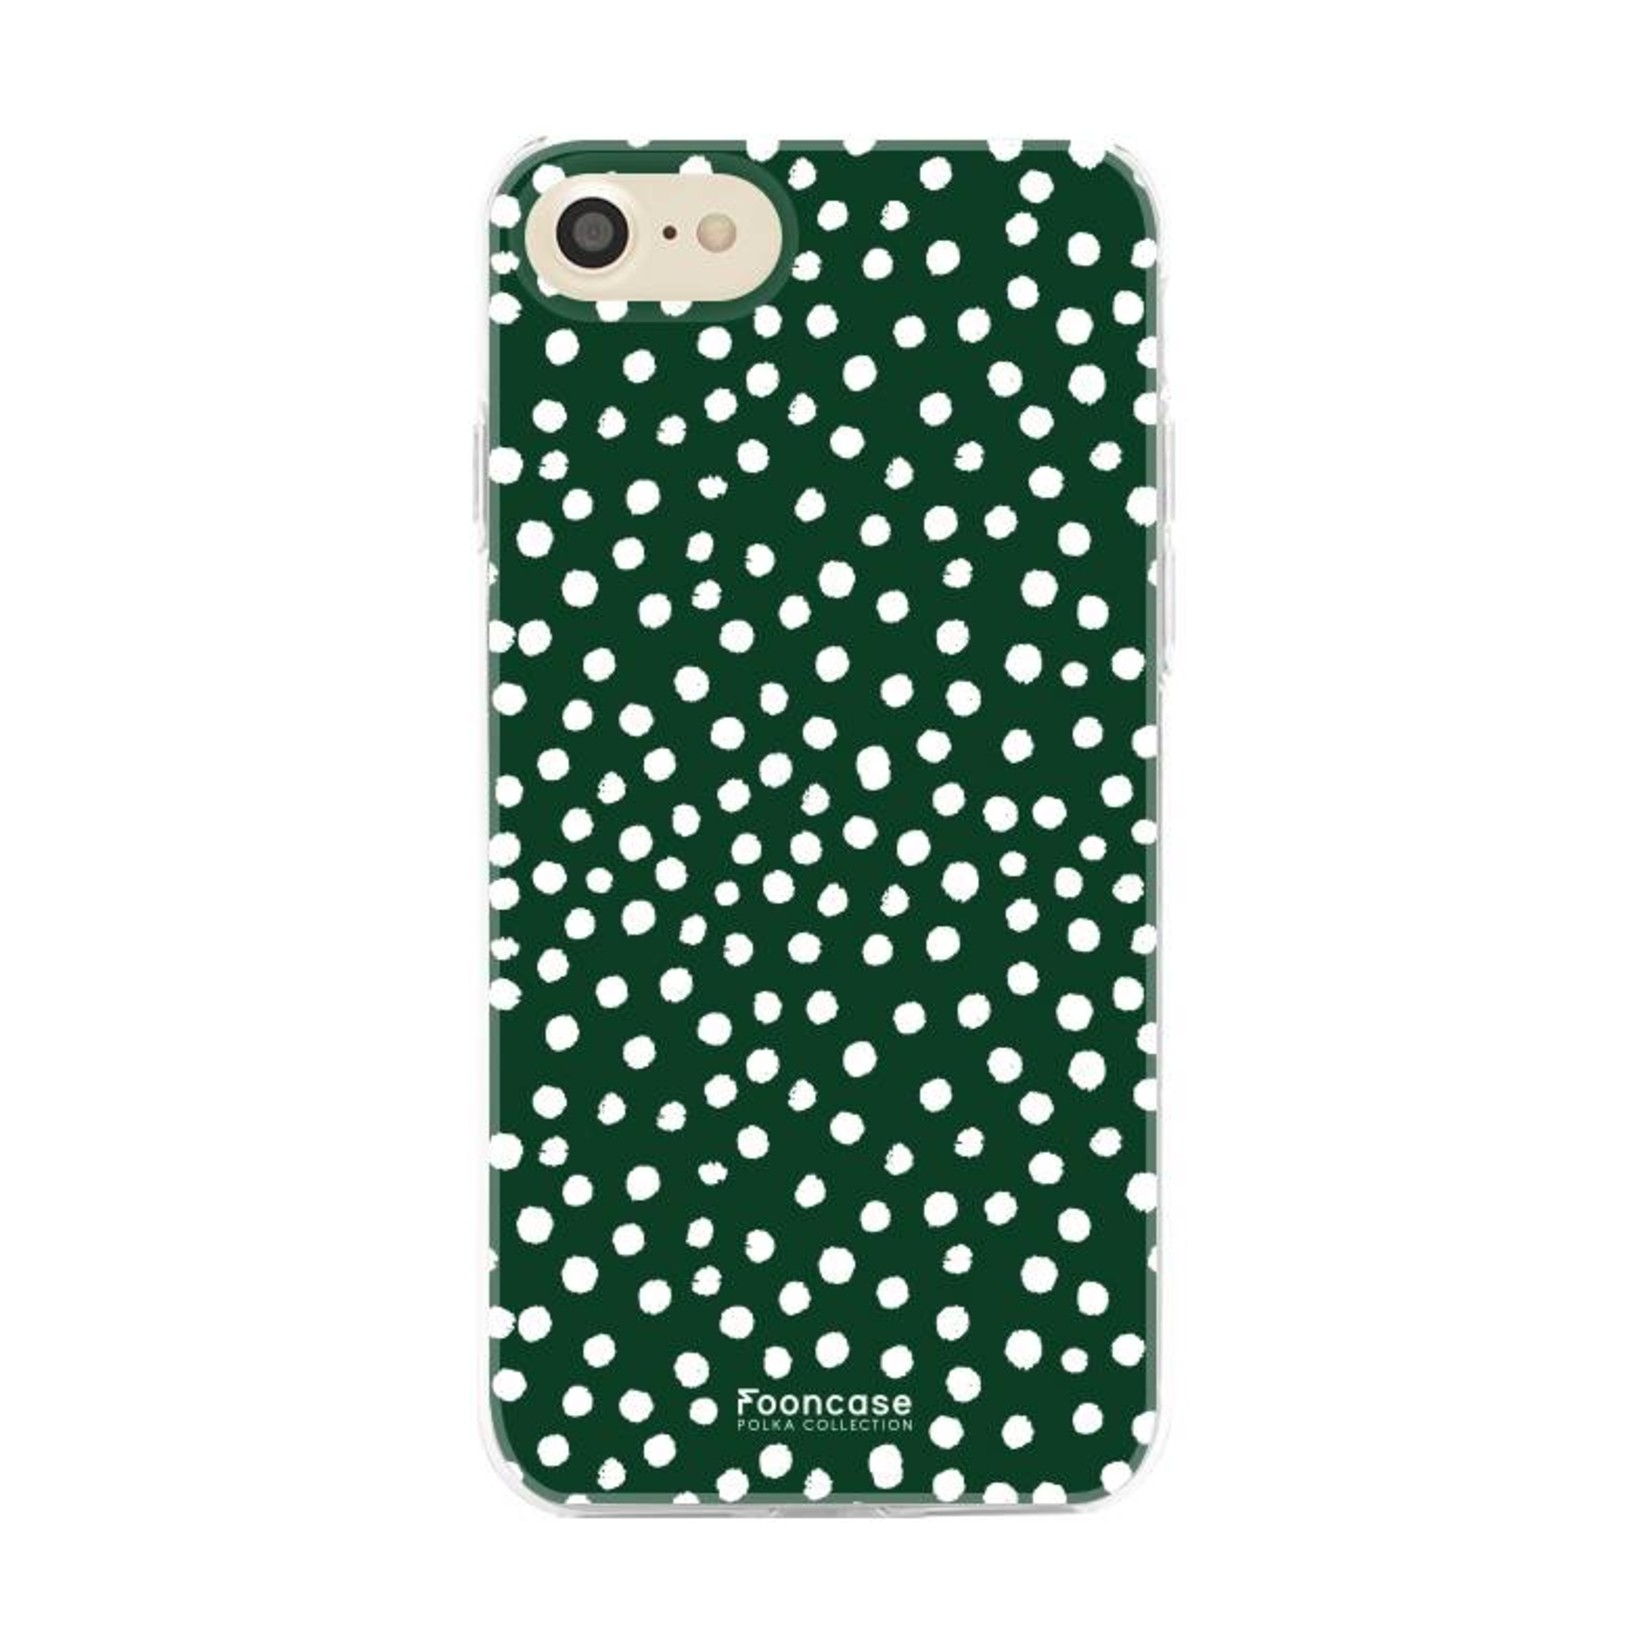 FOONCASE iPhone SE (2020) Case - POLKA COLLECTION / Dark green